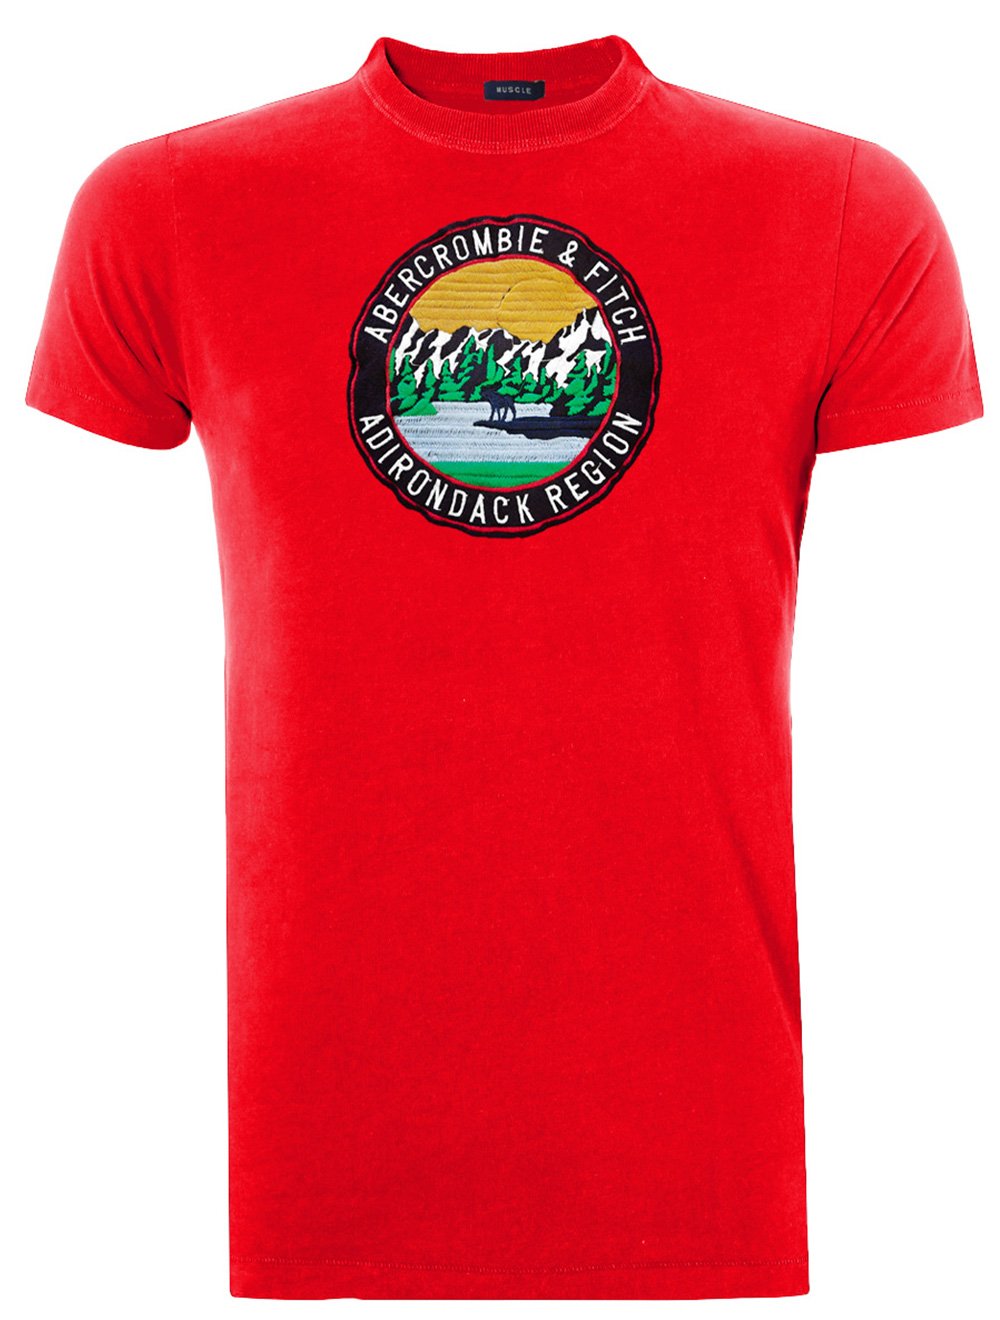 Camiseta Abercrombie Masculina Muscle Adirondack Region Vermelha